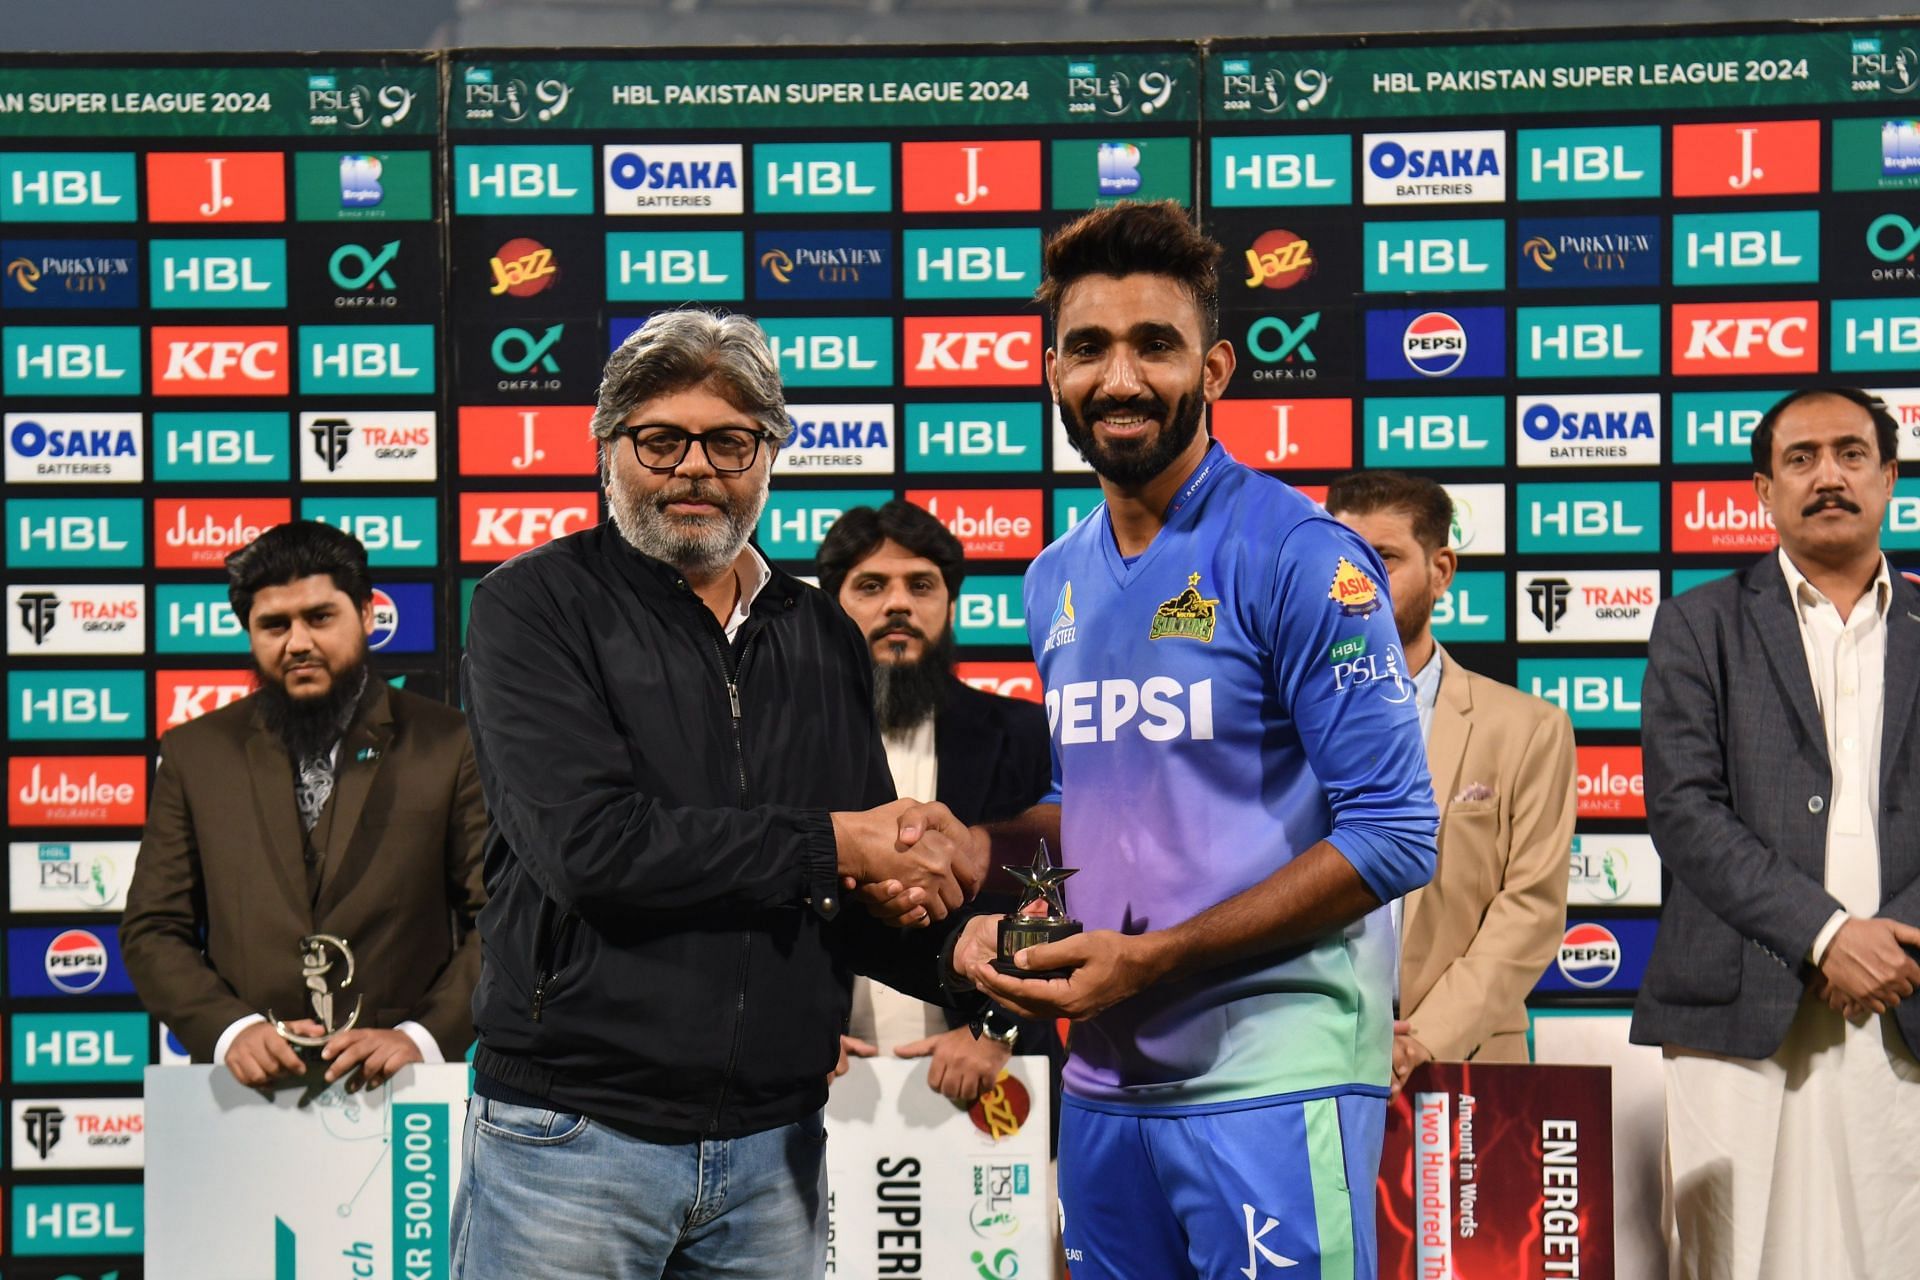 Usama Mir receiving an award (Image Courtesy: X/Pakistan Super League)